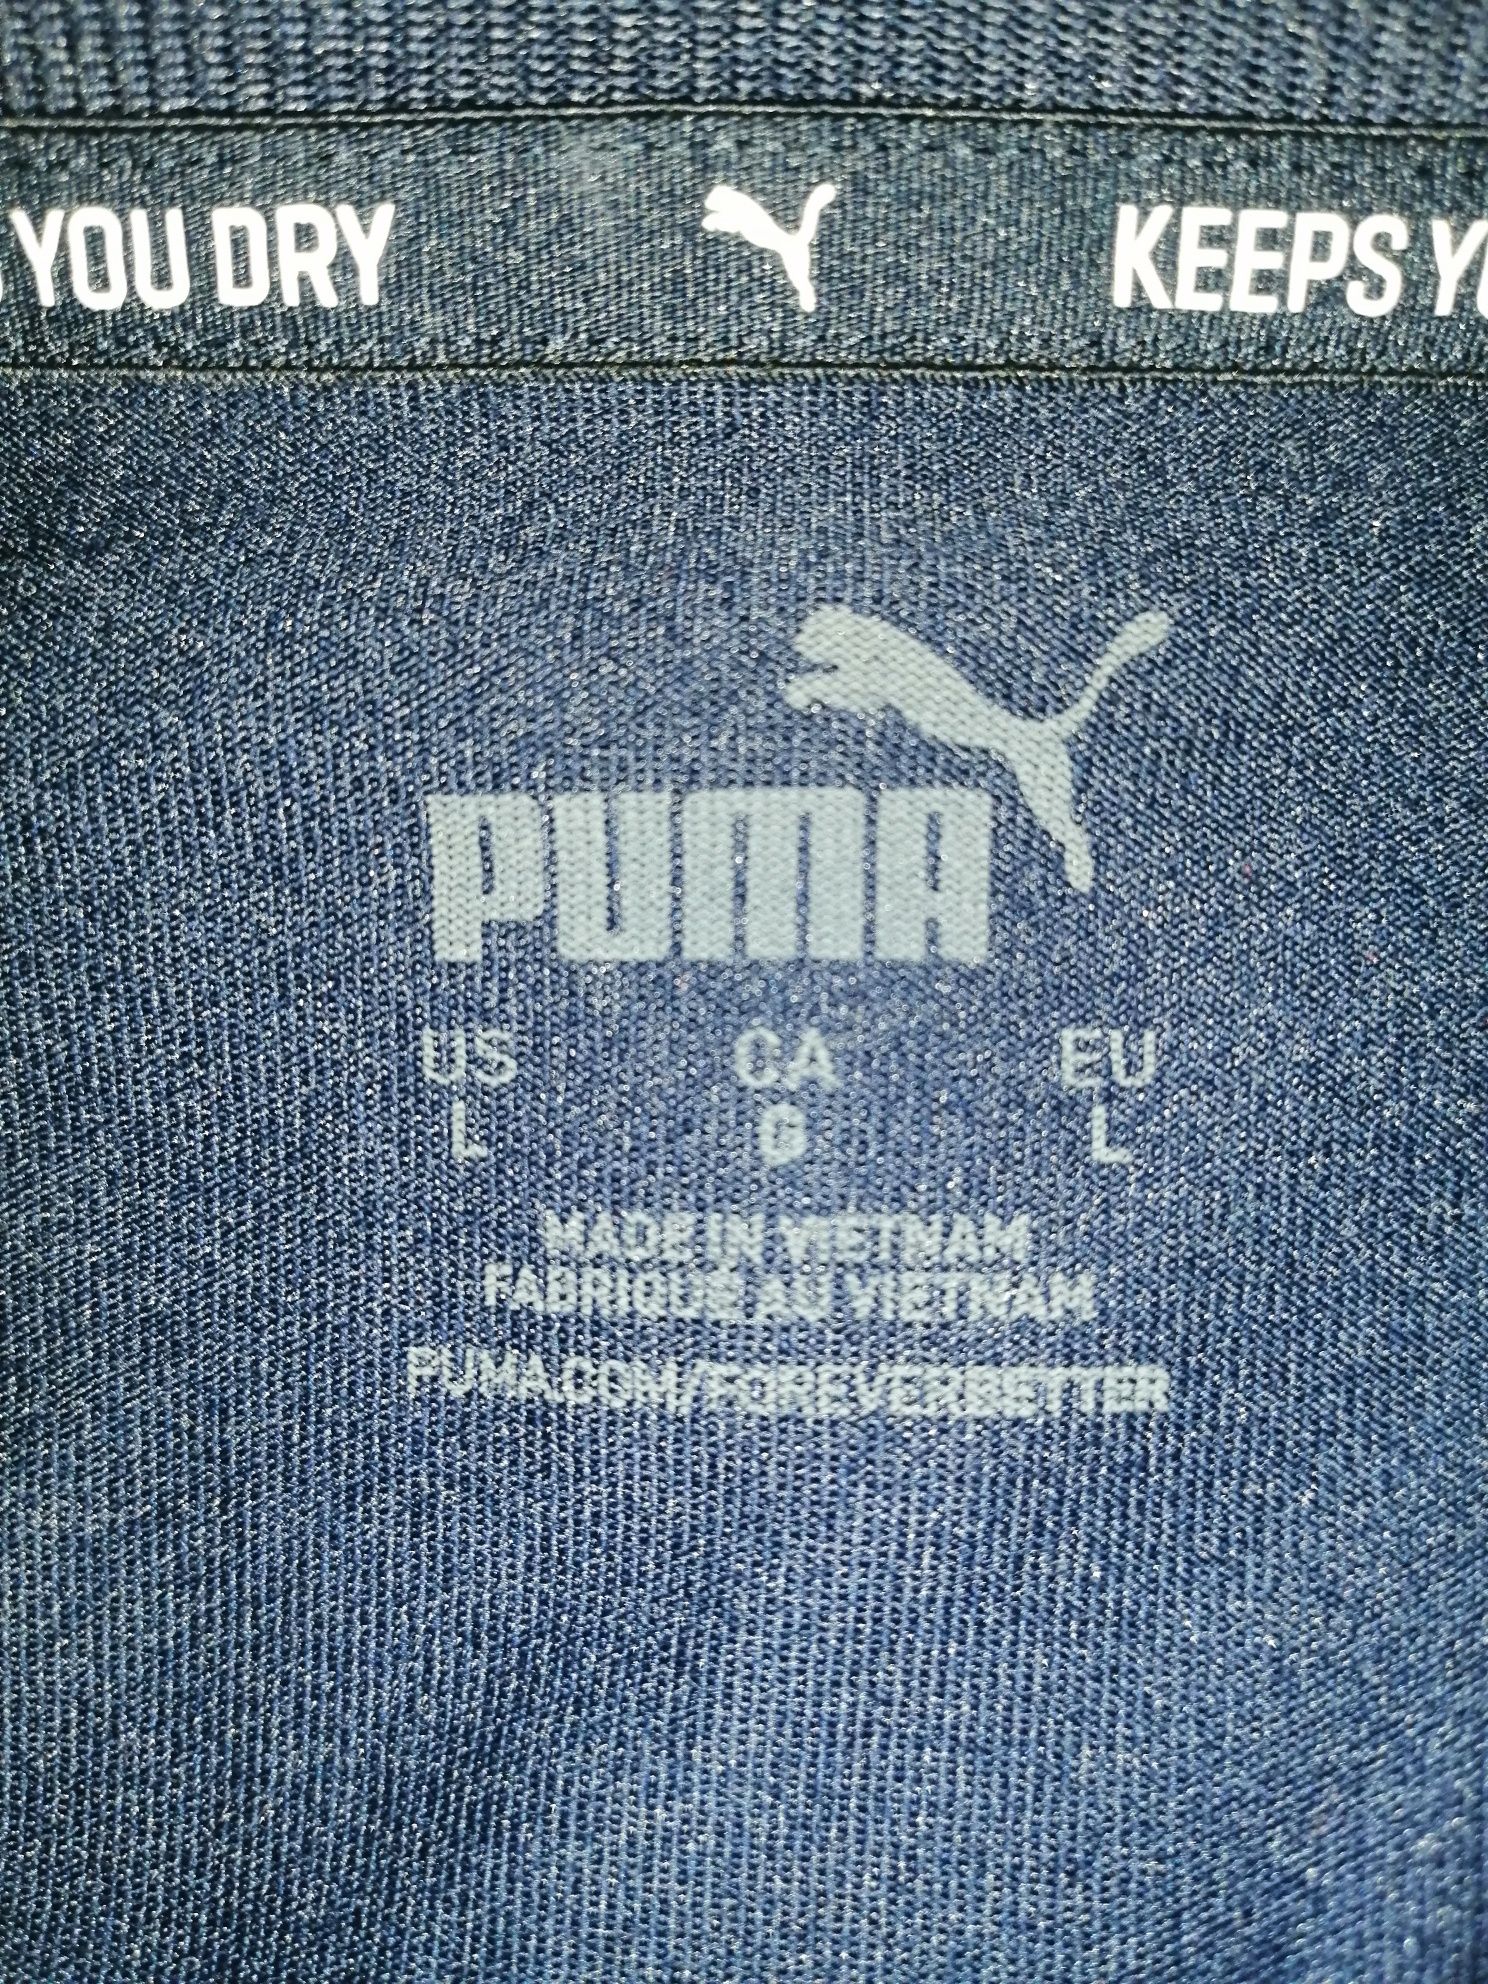 Продам футболку Puma, размер L